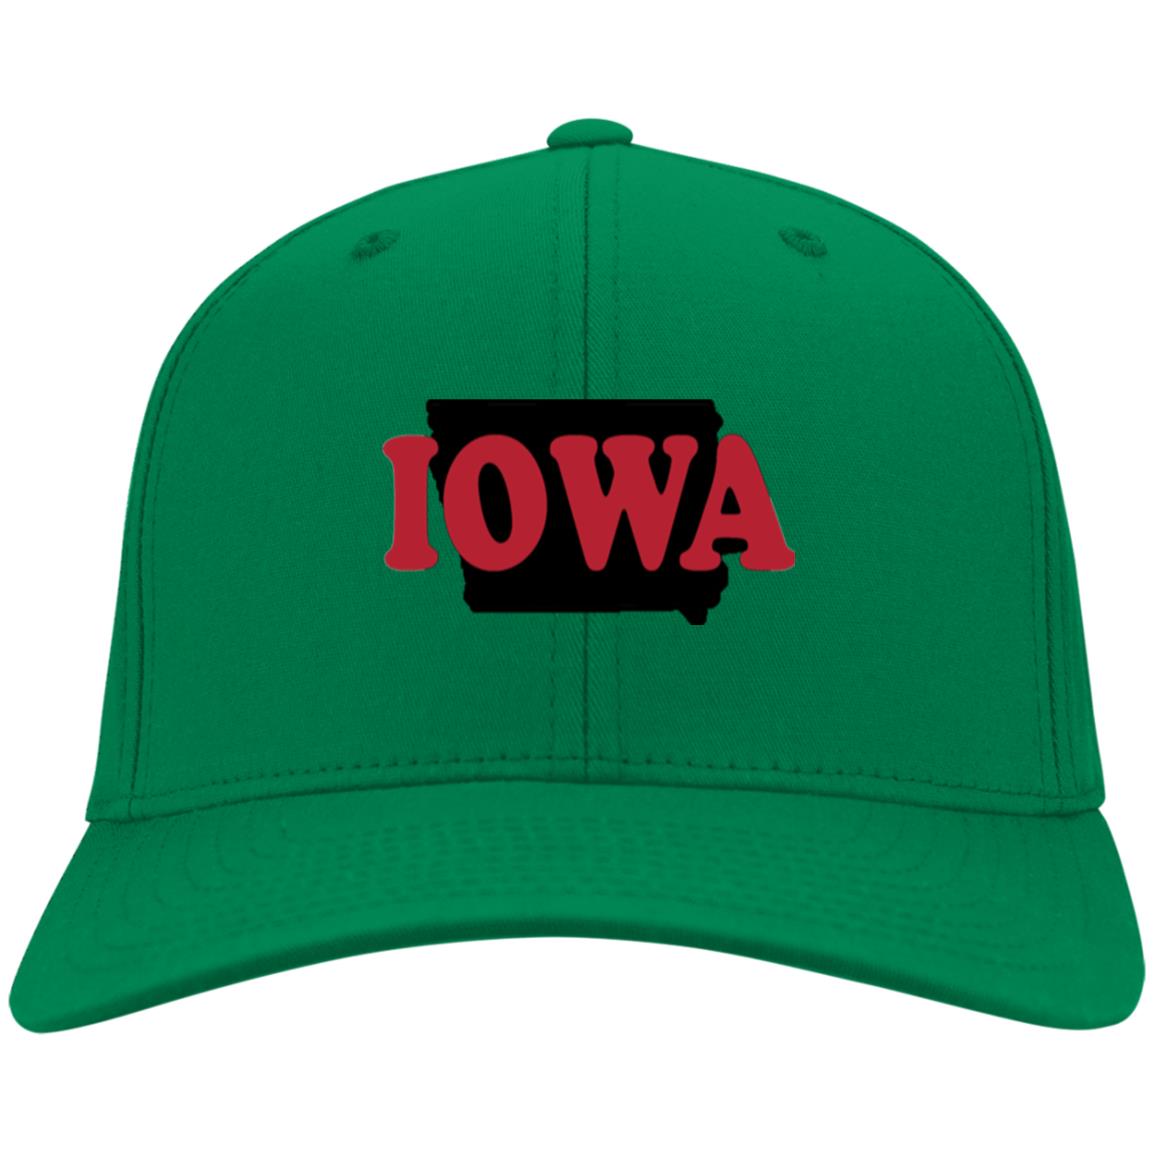 Iowa State Hat